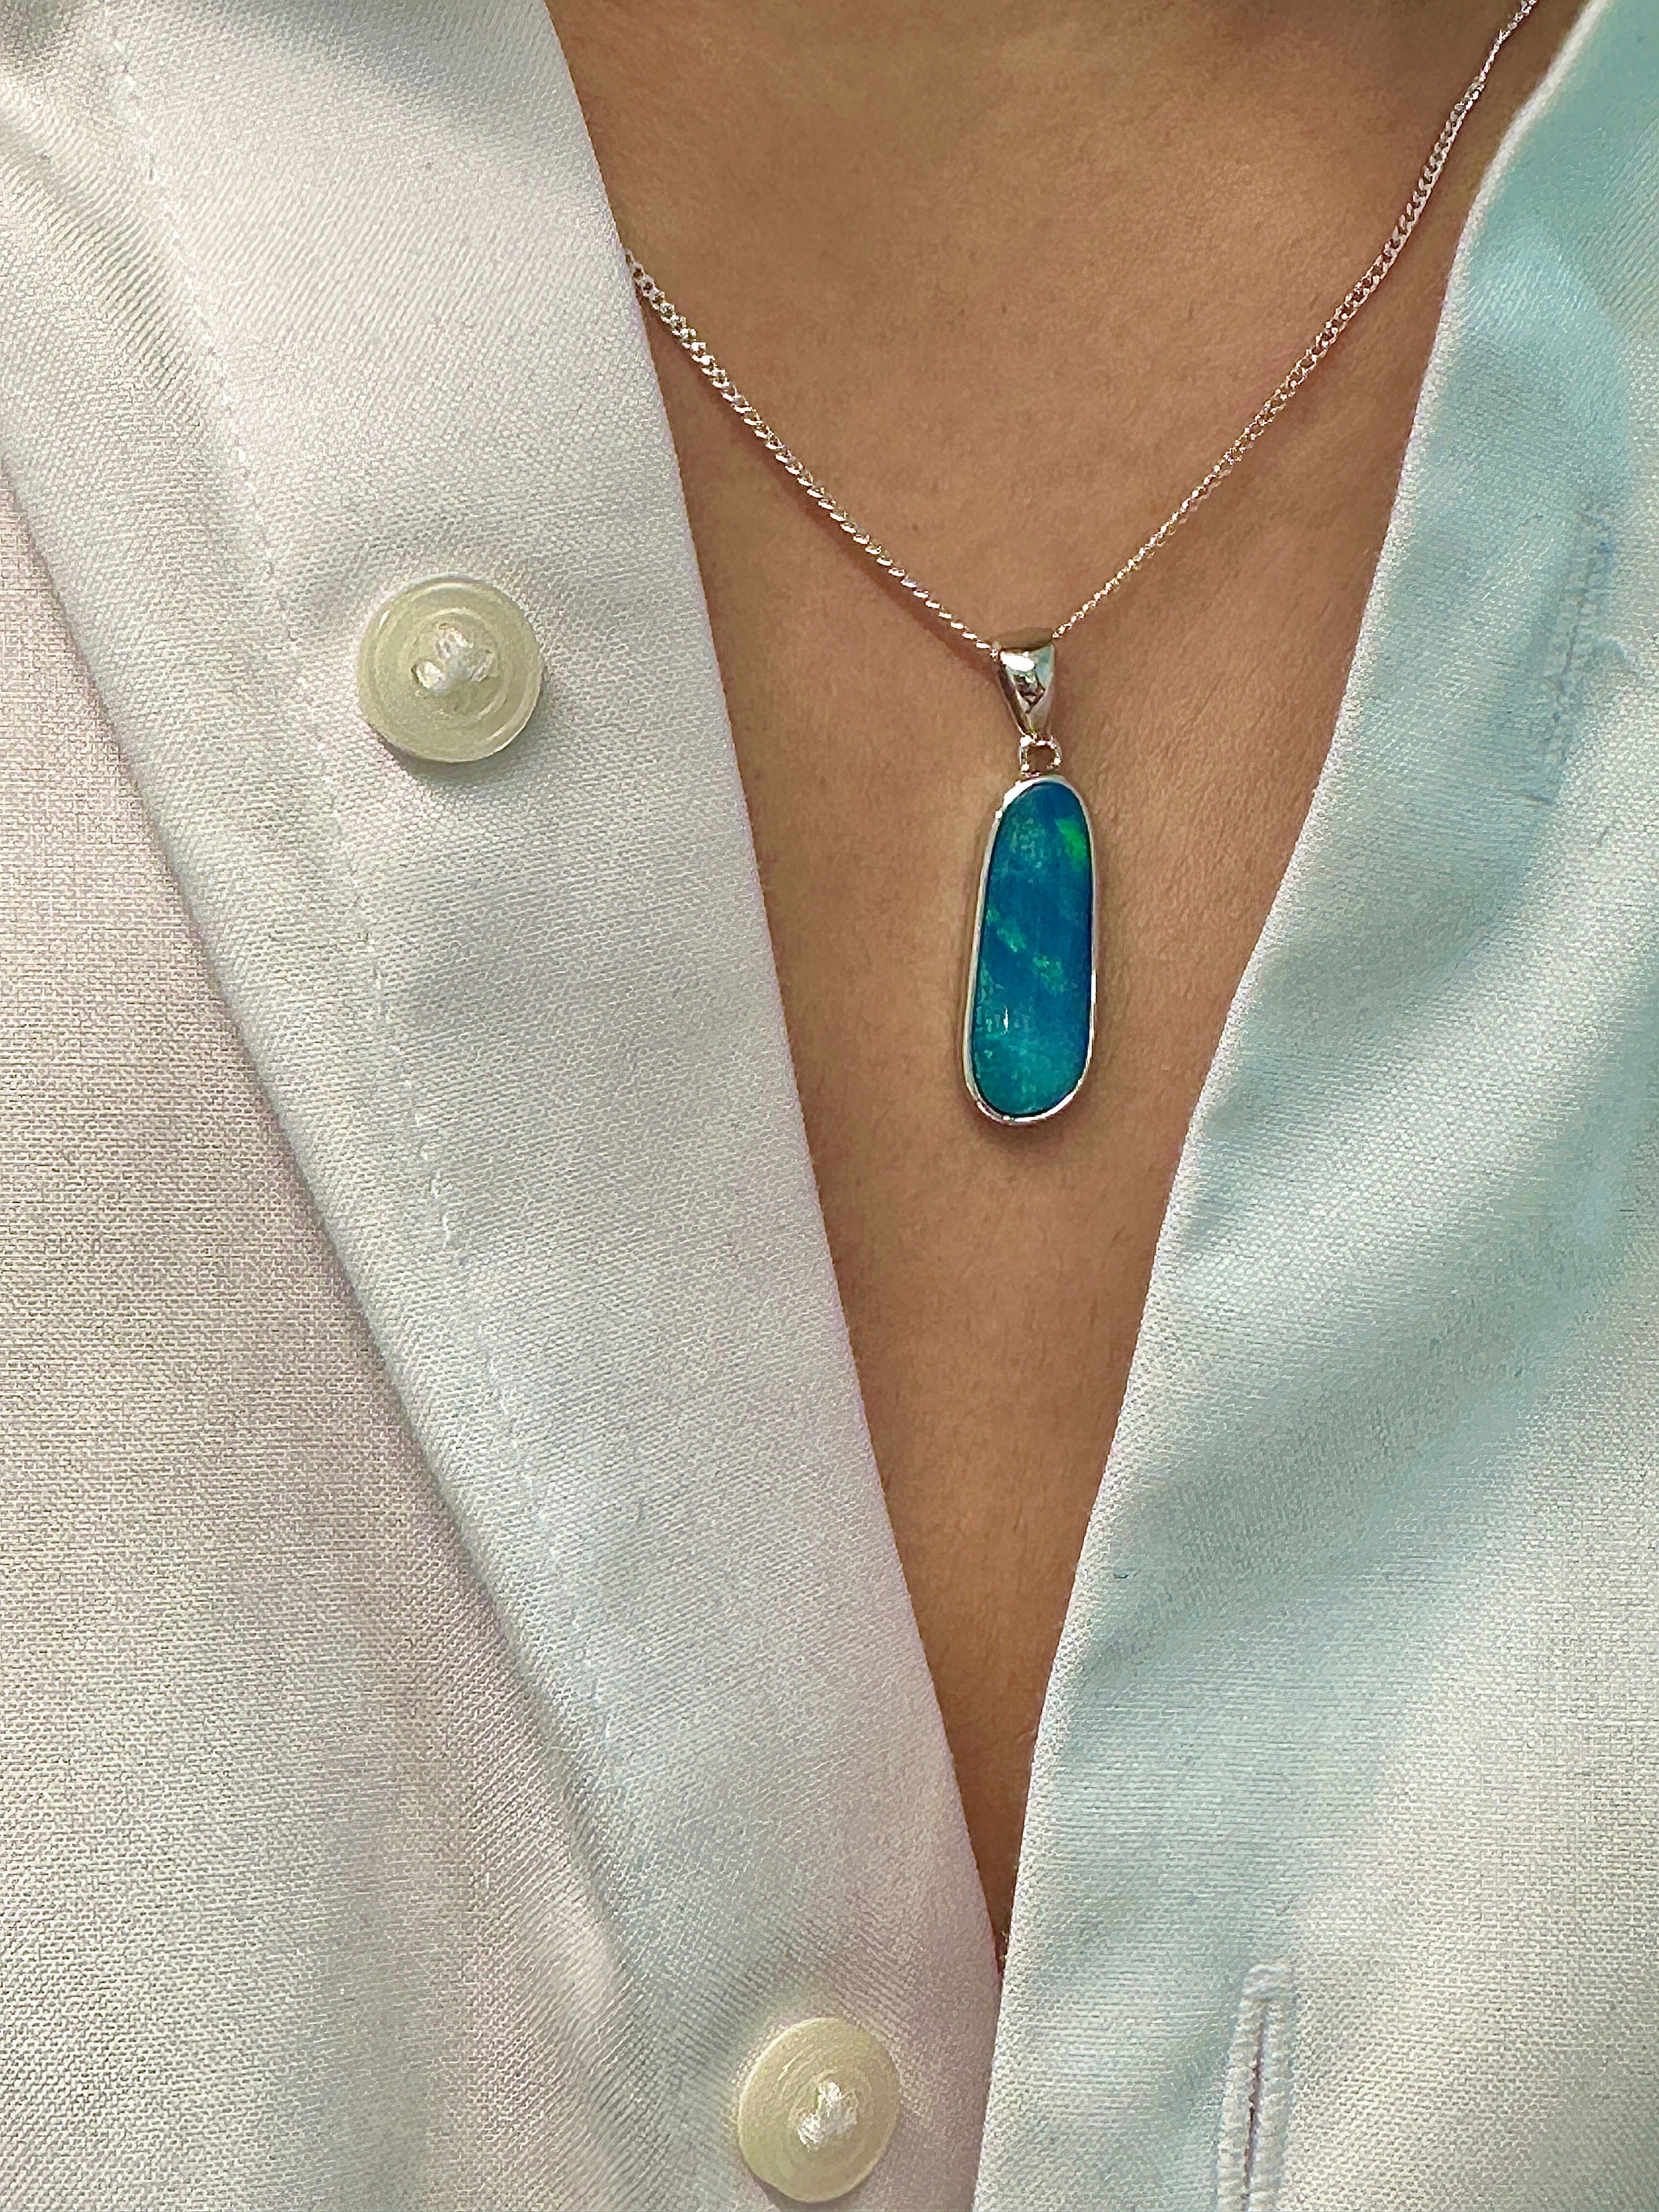 Australian Opal | Monique Sterling silver pendant